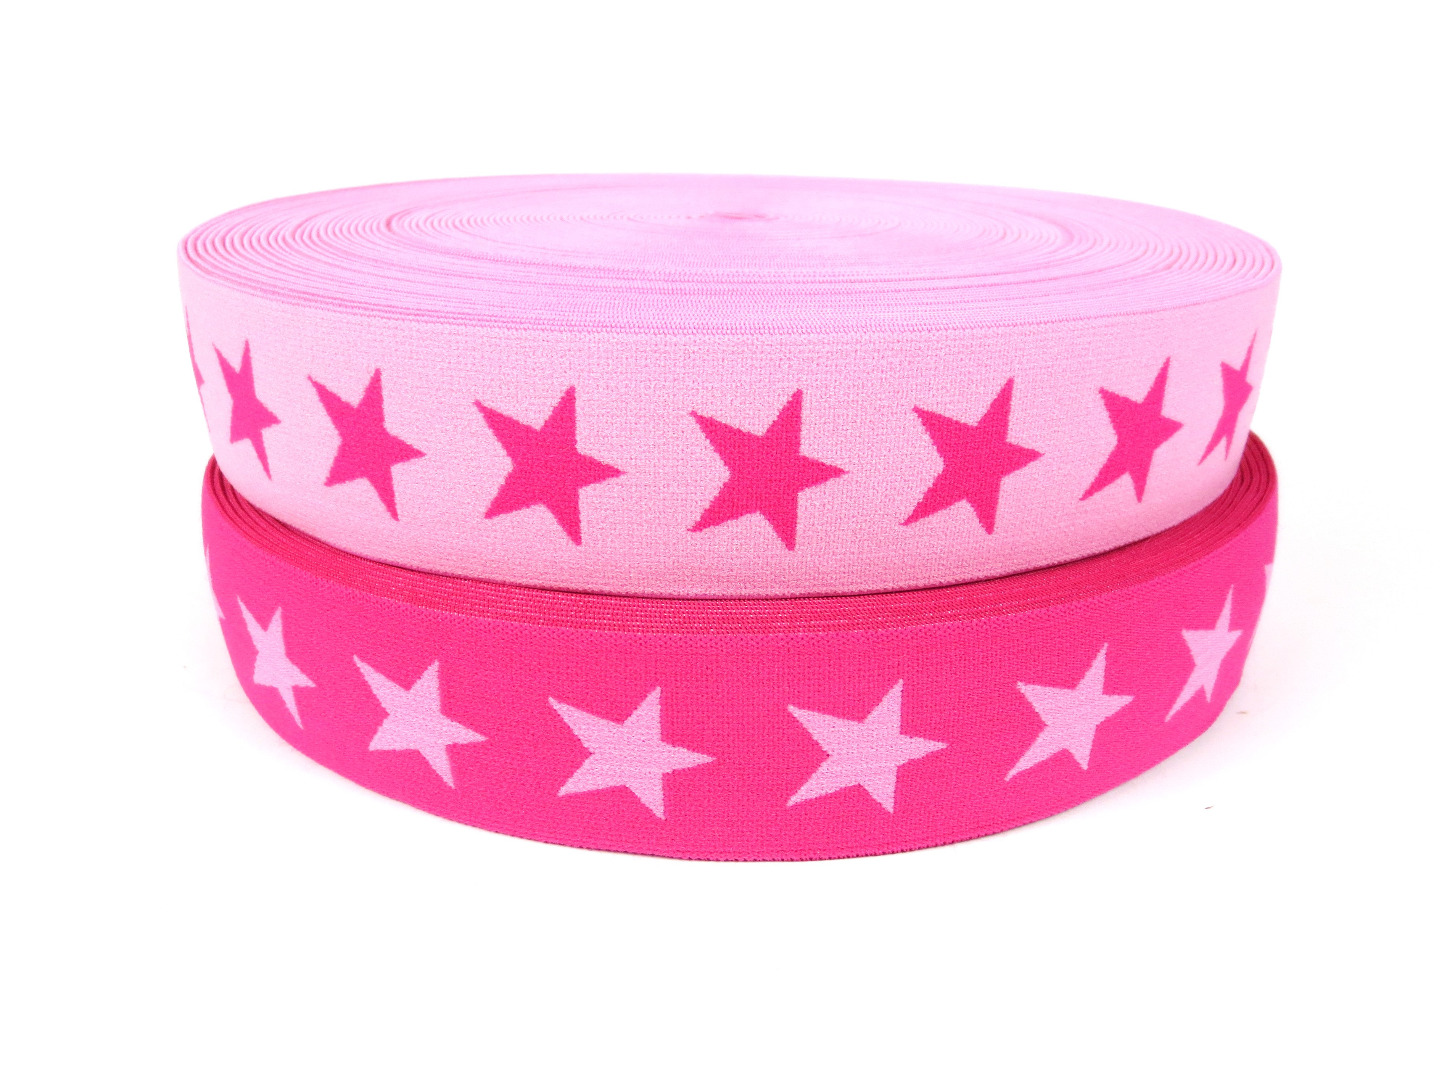 Gummiband Sterne - dunkelpink-rosa - 4 cm Breit 3